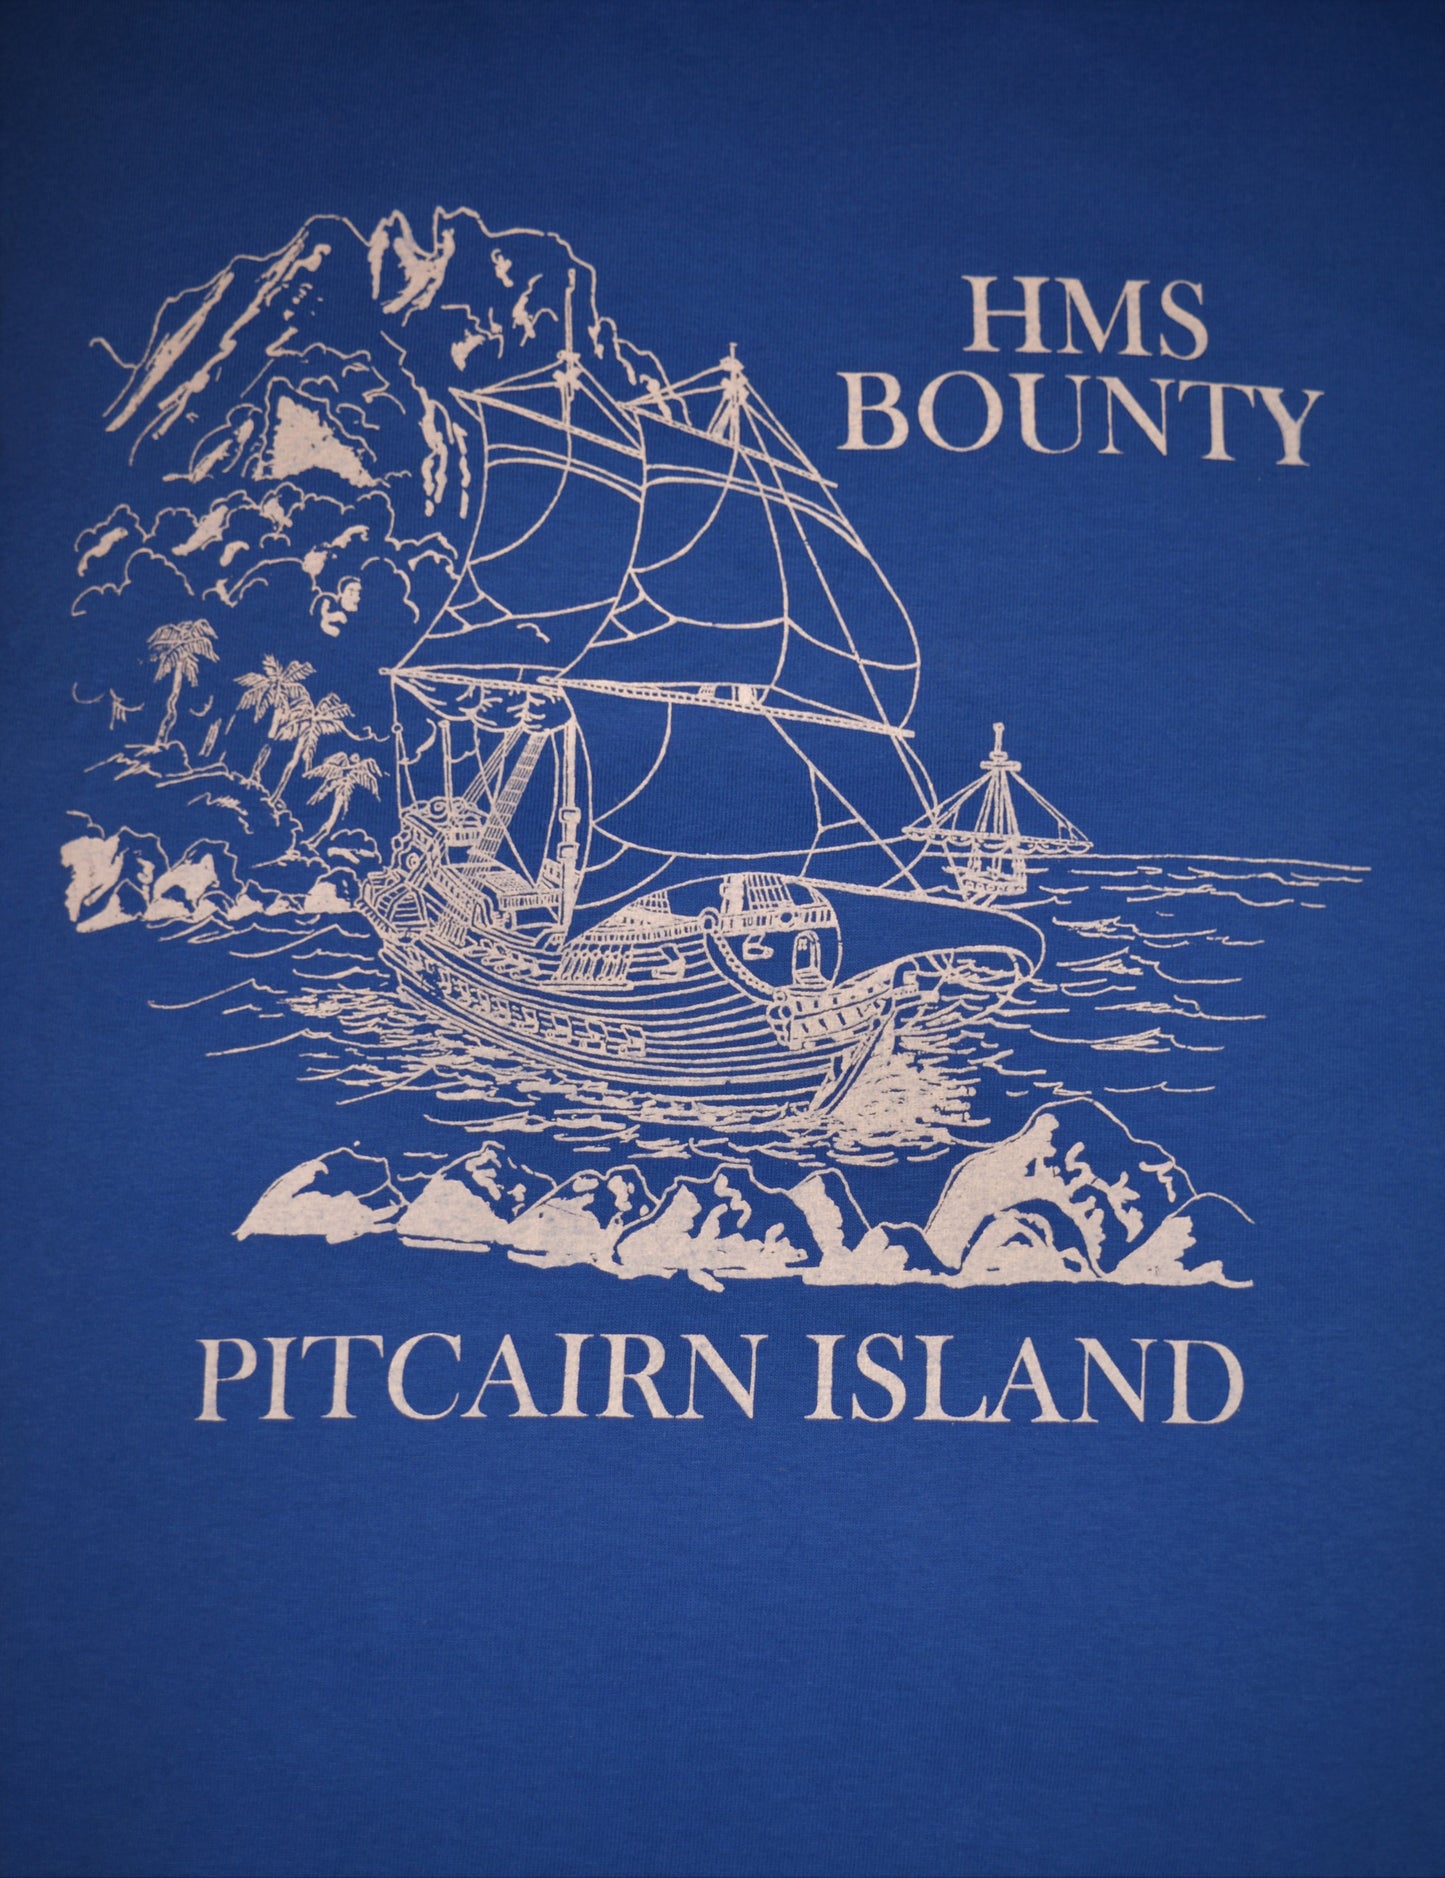 T-shirt Pitcairn Island imprimé HMAV Bounty